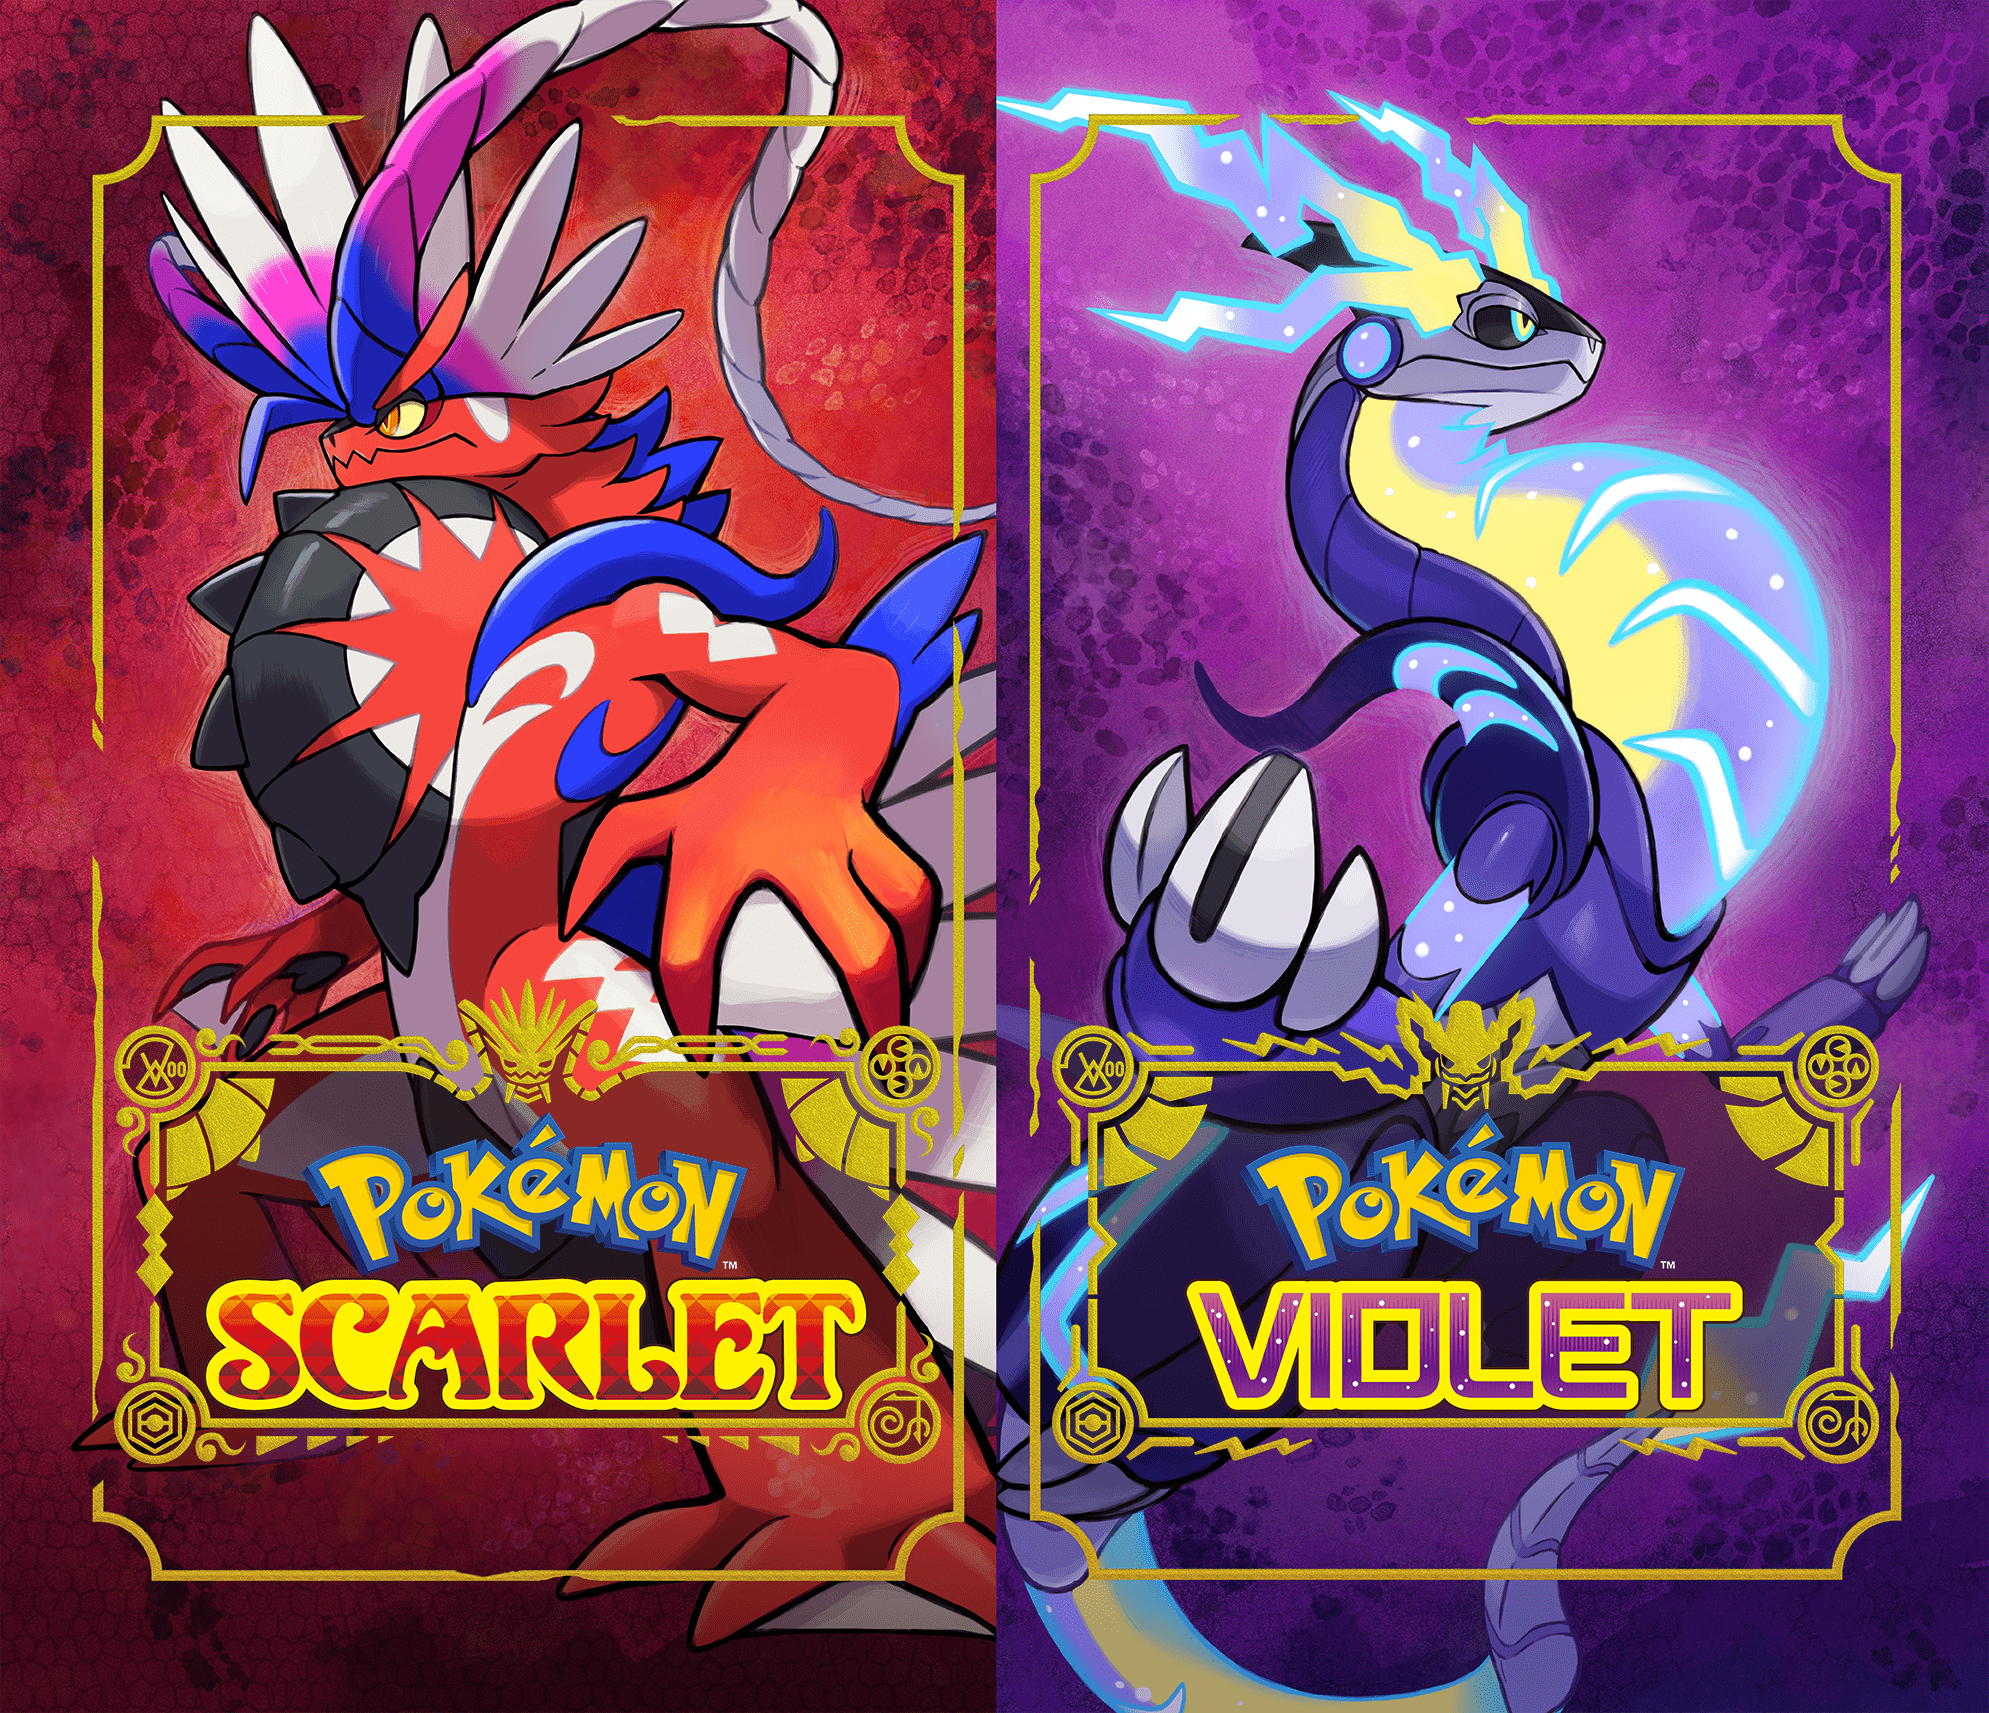 Pokemon-Scarlet-and-Violet_2022_06-01-22_053